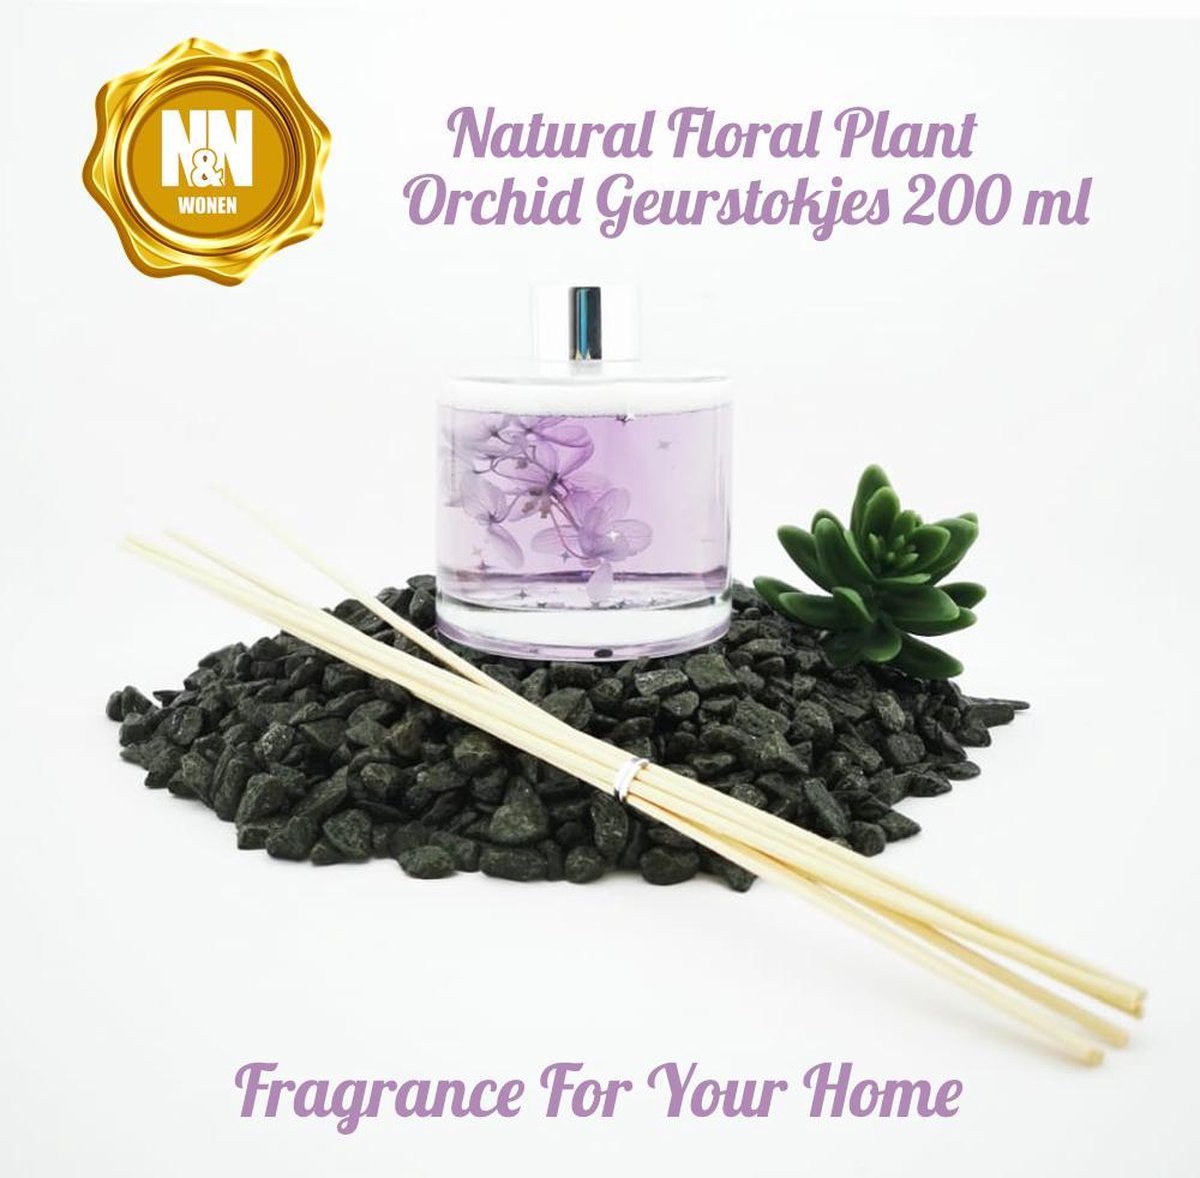 N&N Wonen Natural Floral Plant Orchid Geurstokjes - 200 ml